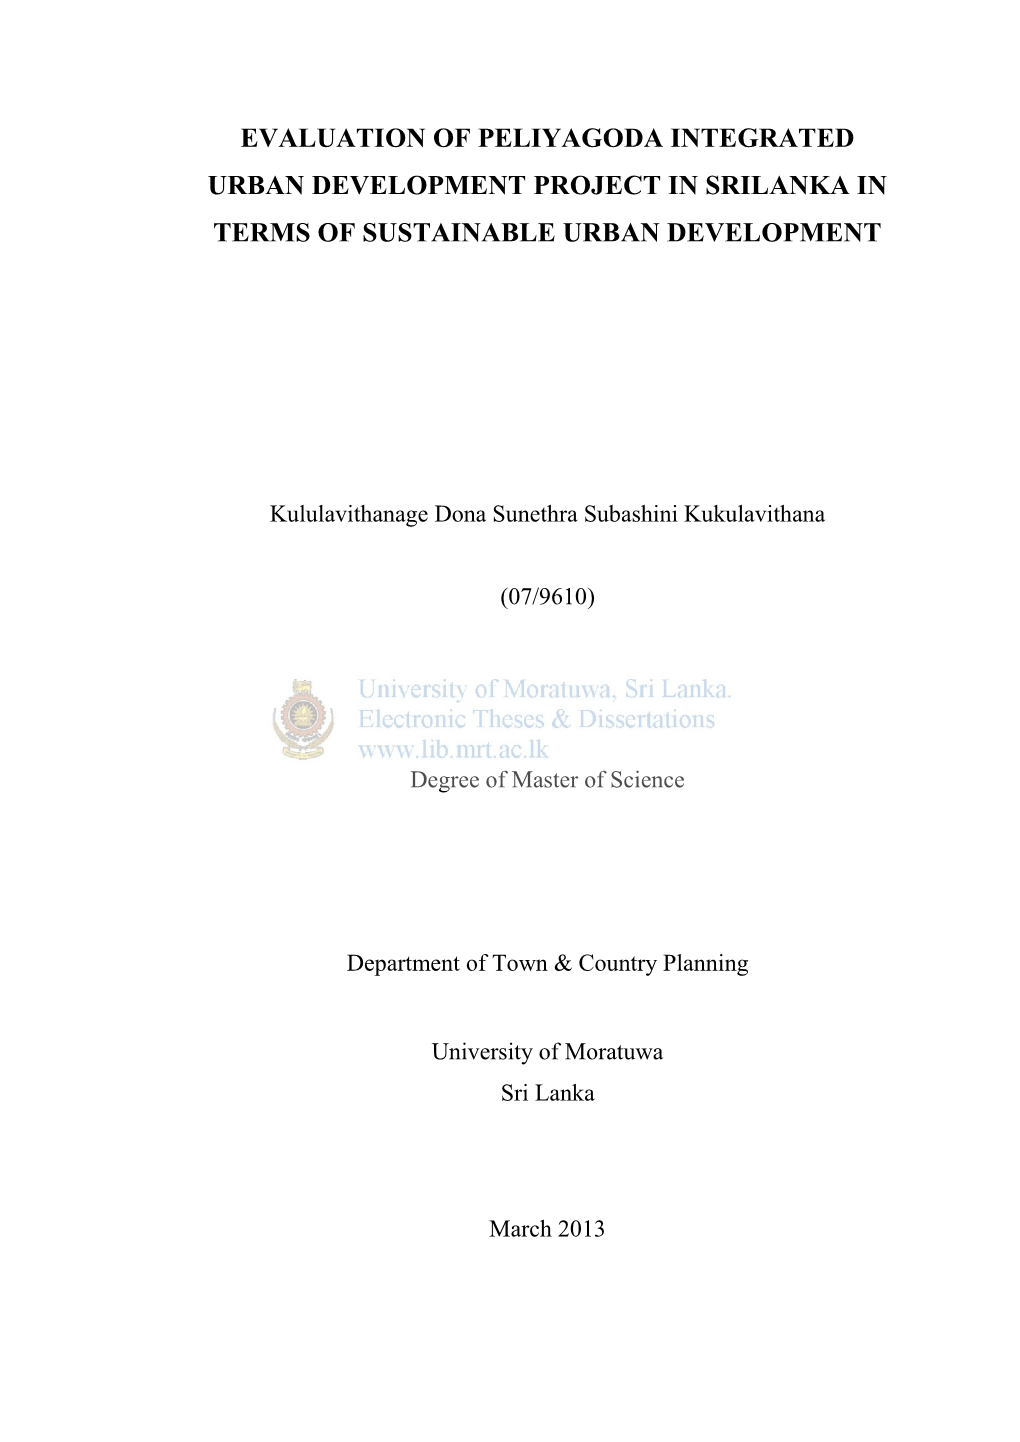 Evaluation of Peliyagoda Integrated Urban Development Project in Srilanka in Terms of Sustainable Urban Development